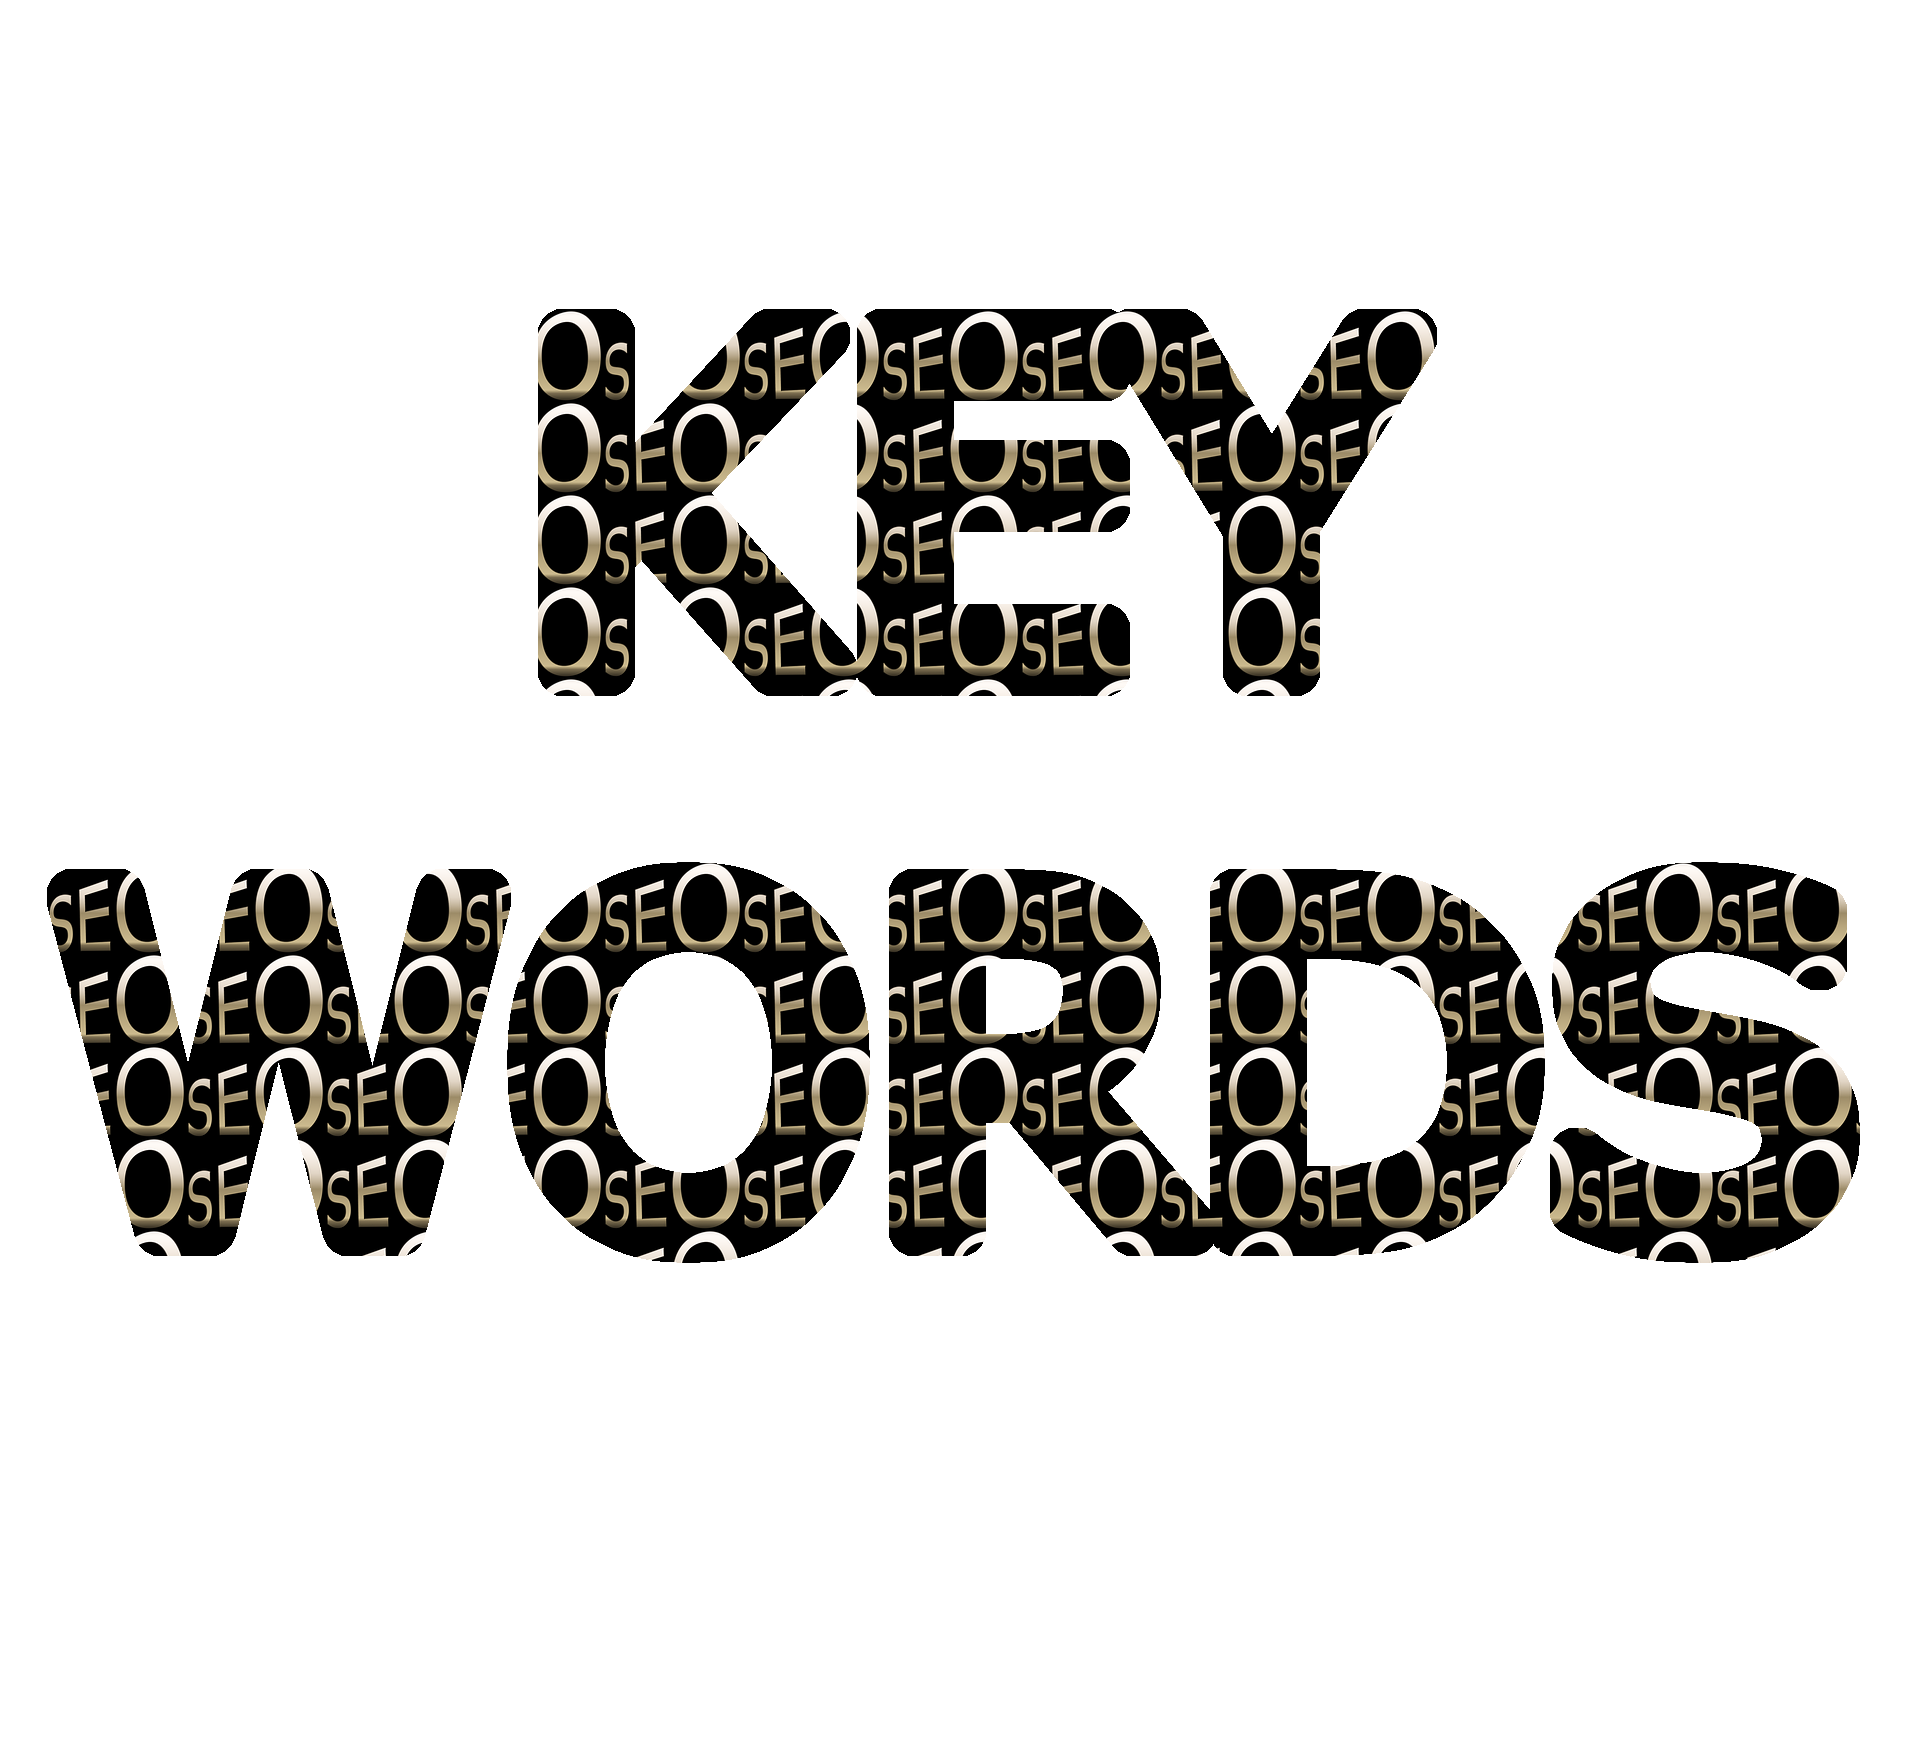 seo-key-words-free-image-download